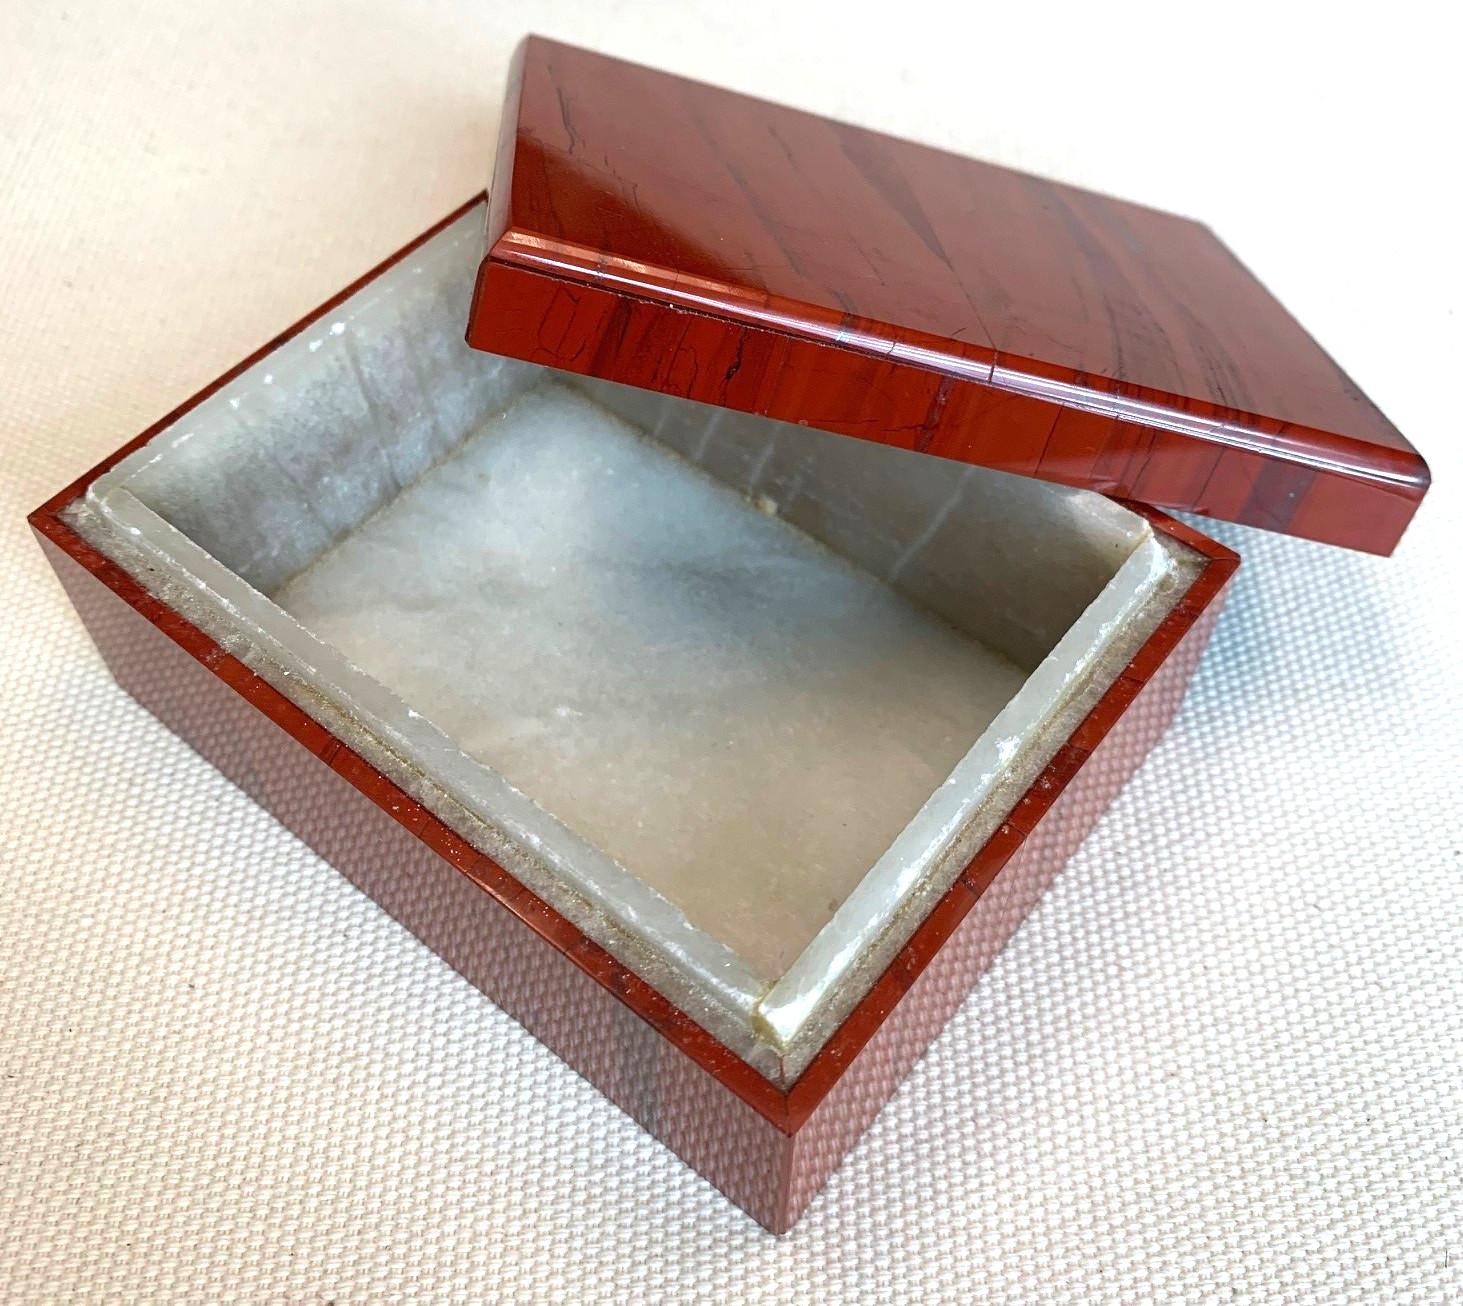 Artisan Marbled Red Jasper Semi-precious Decorative Desk Accessory / Gift Box with Lid